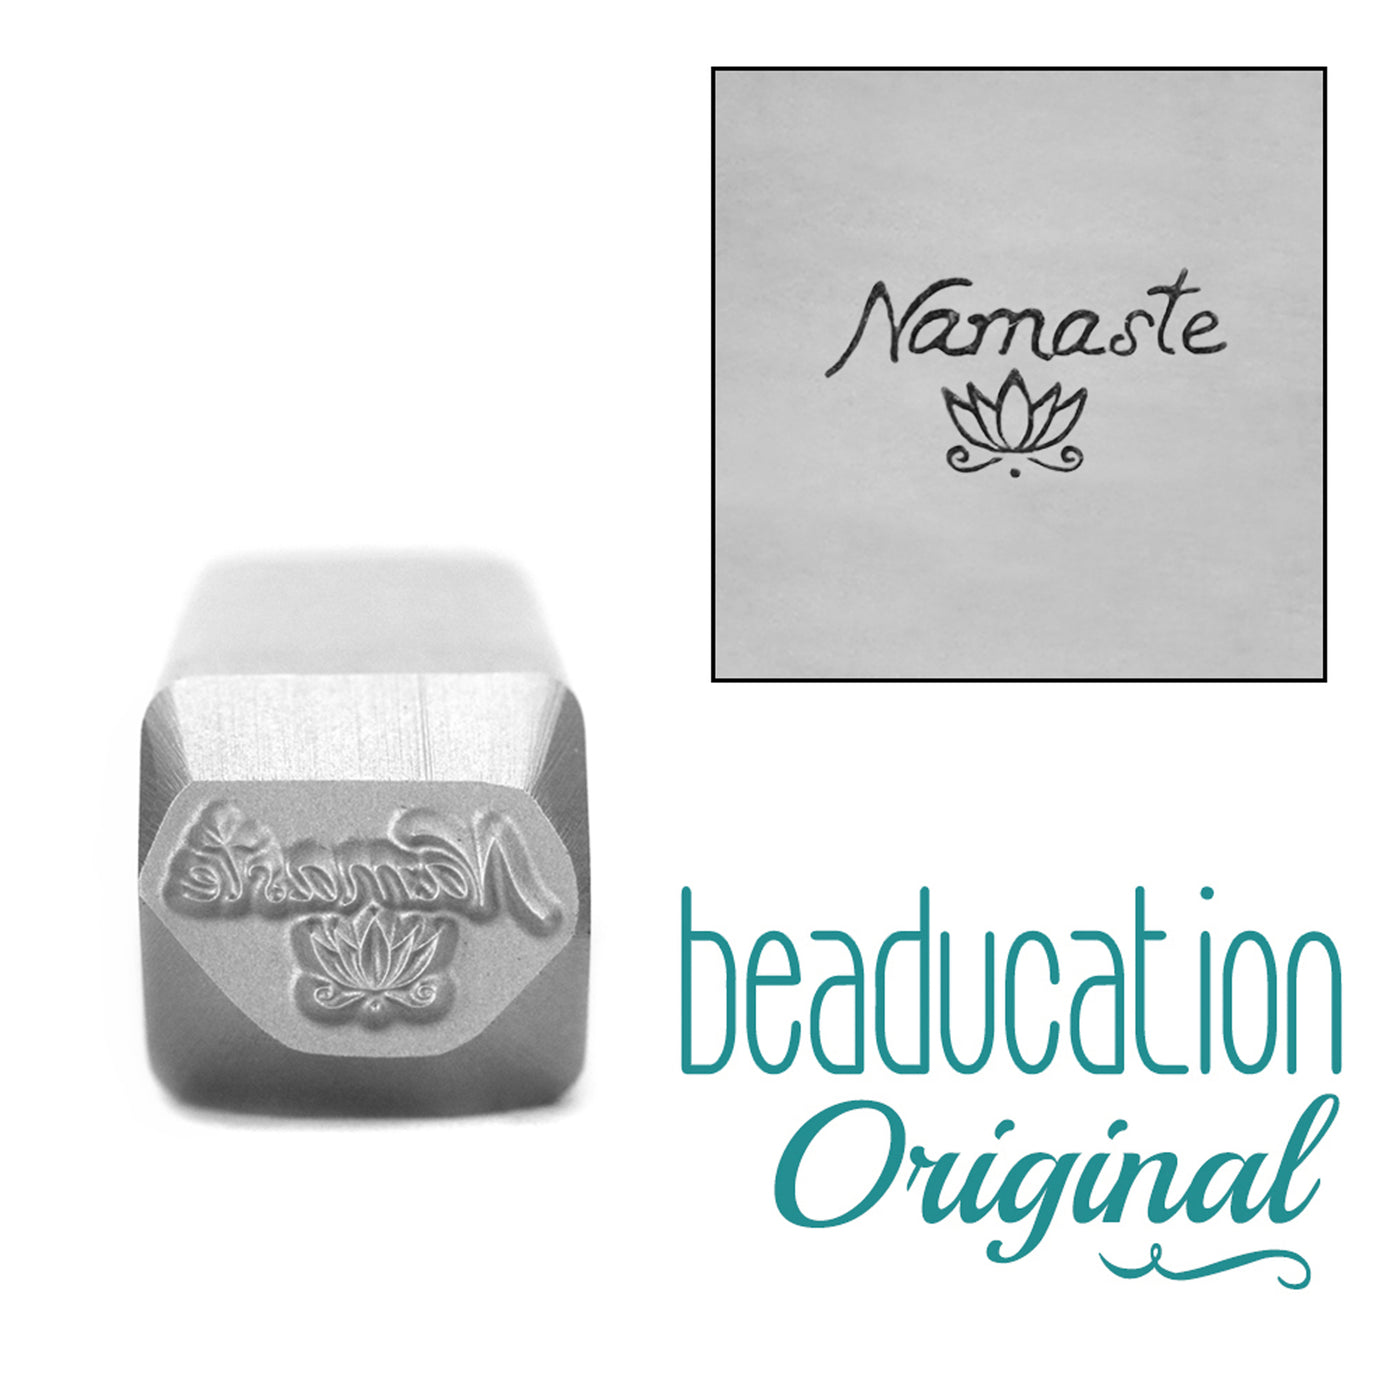 Leaf Snowflake Metal Design Stamp, 10mm - Beaducation Original